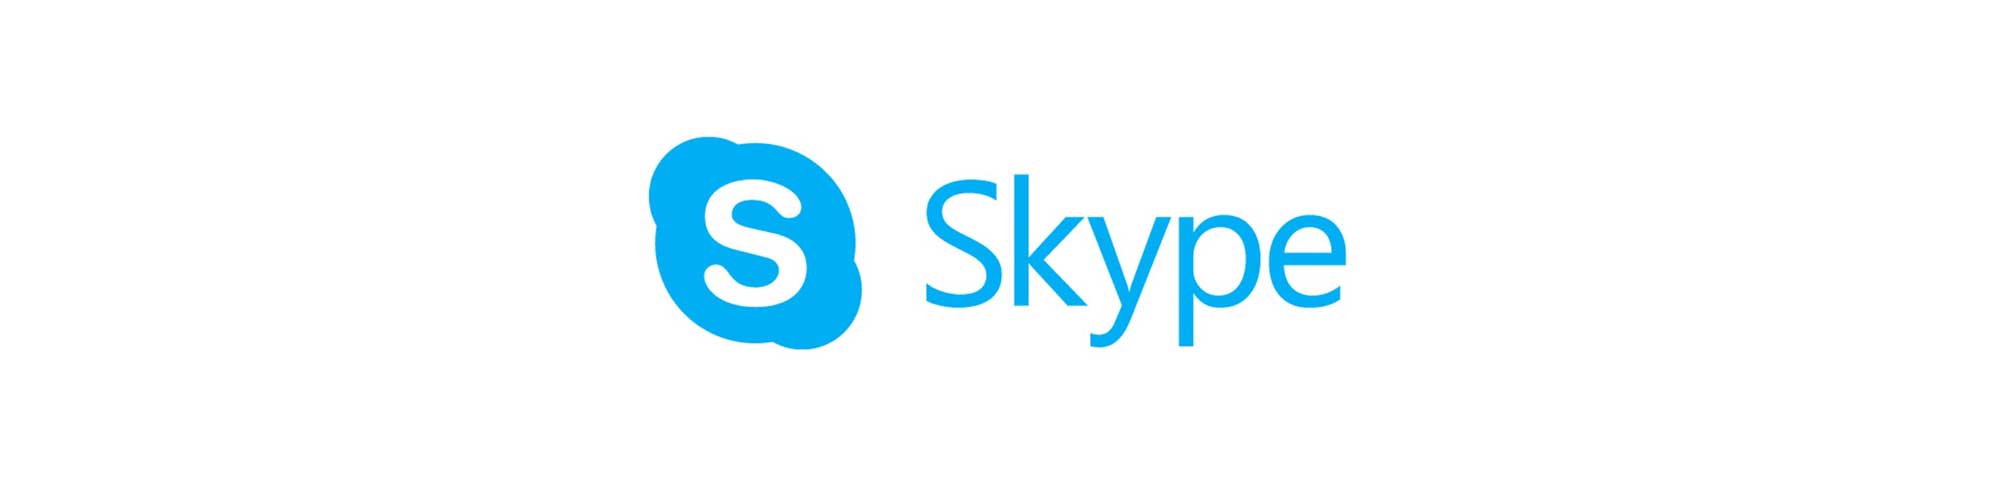  Skype          !